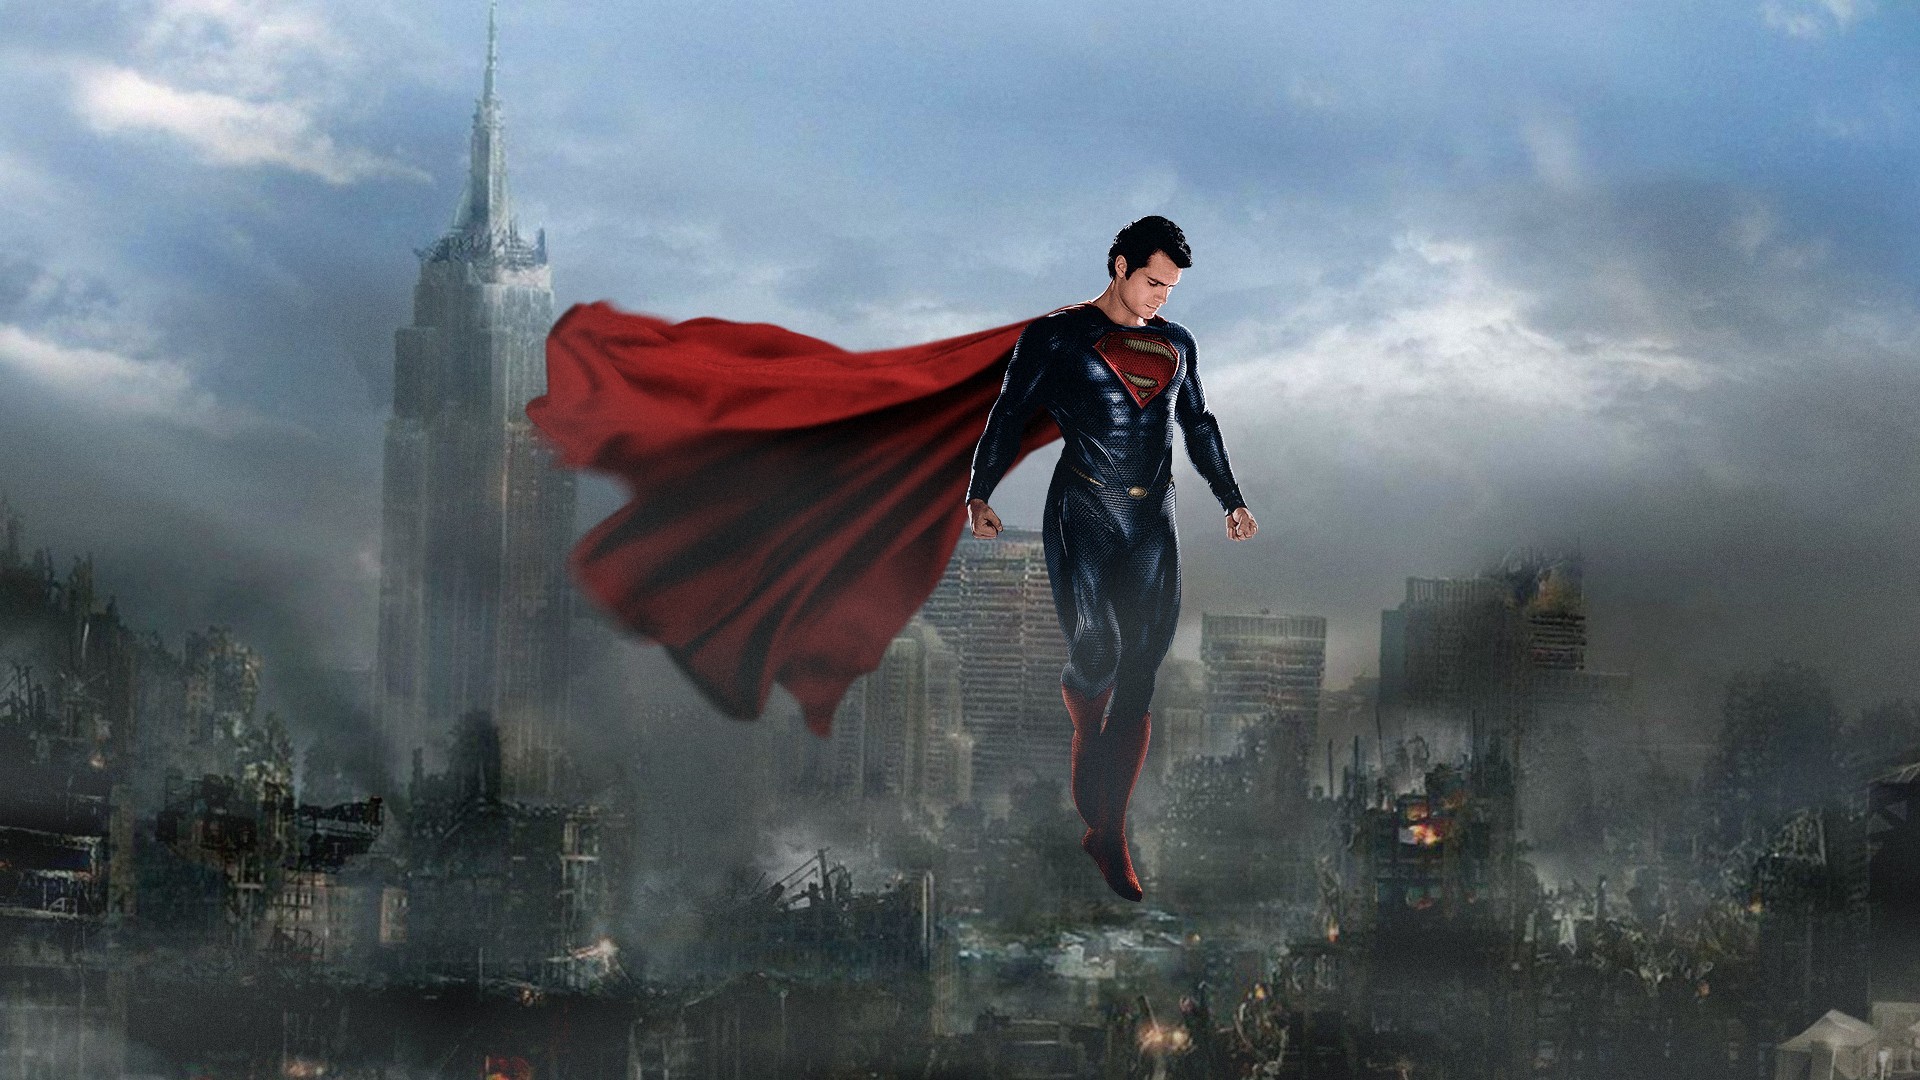 General 1920x1080 Superman Henry Cavill Man of Steel movies superhero ruins cape actor cityscape Aquaman